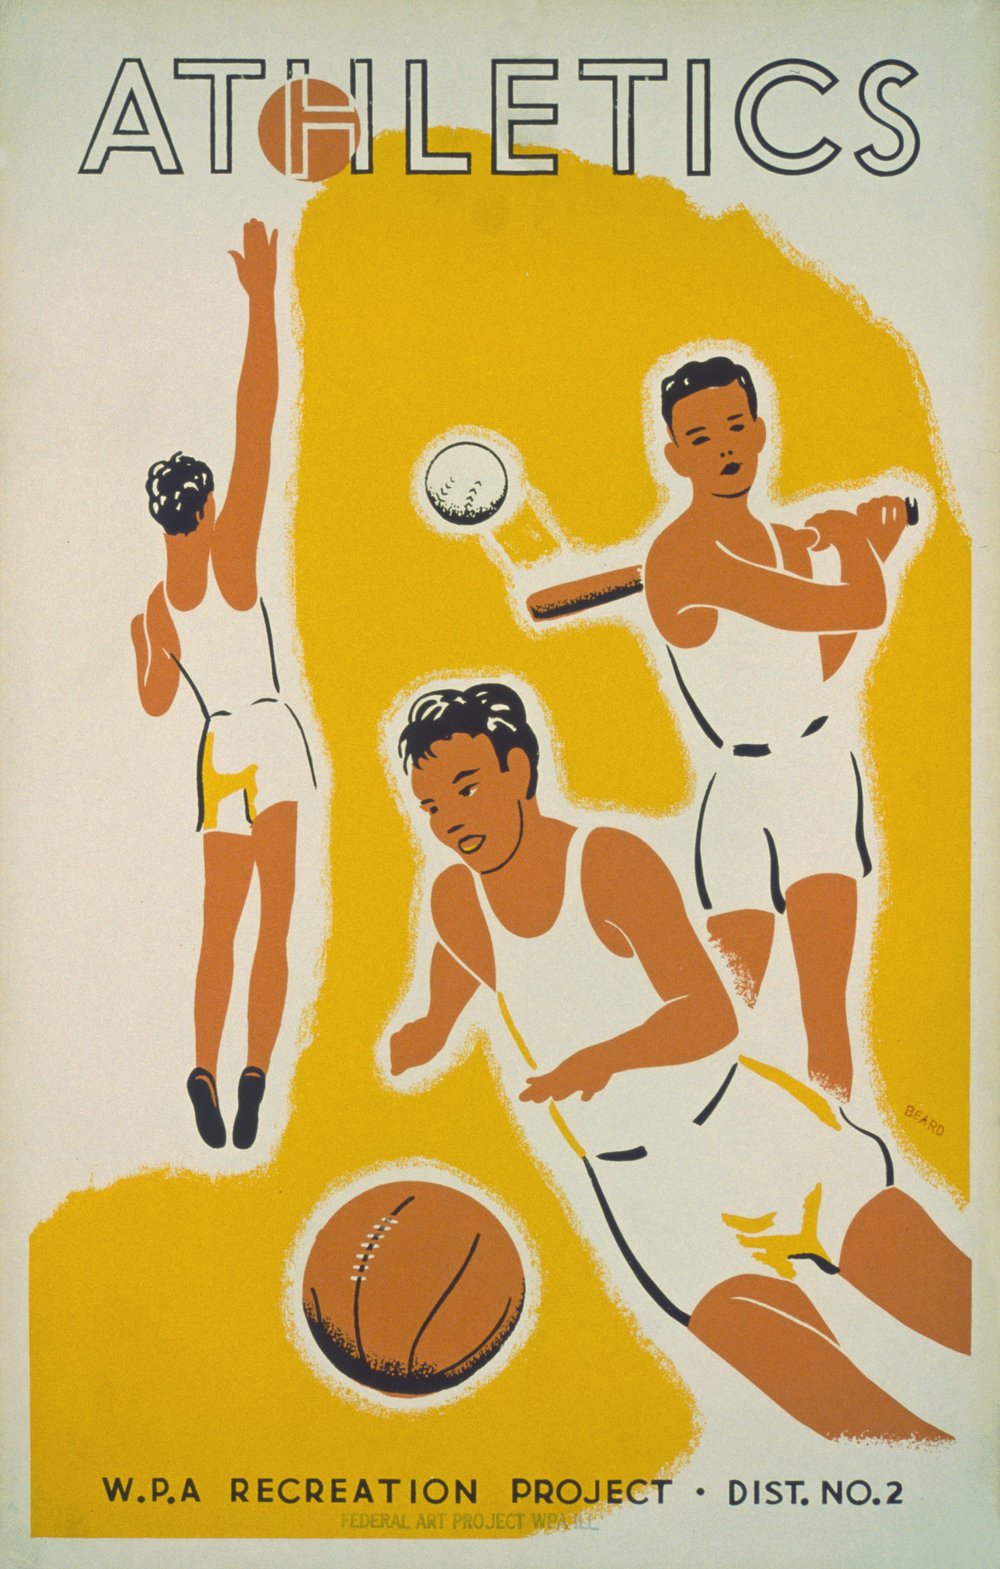 vintage-athletics-recreation-poster-139447131369s.jpg